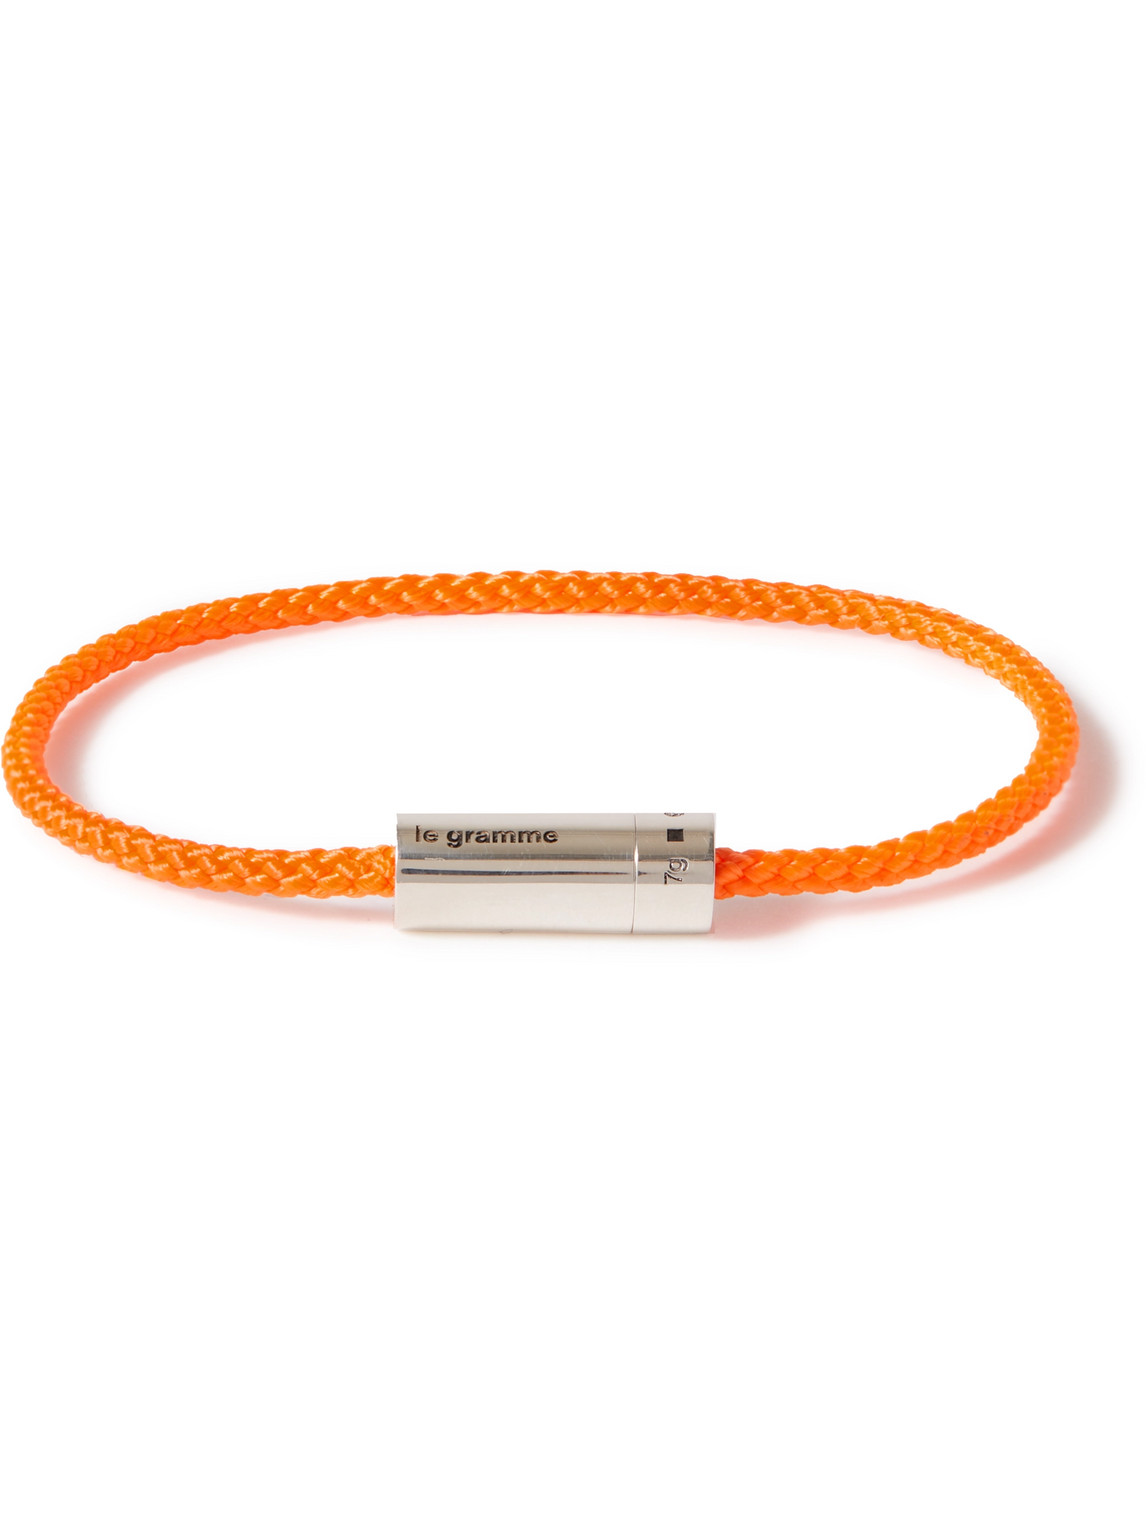 Le Gramme - 5g Braided Cord and Sterling Silver Bracelet - Men - Orange - 21 von Le Gramme